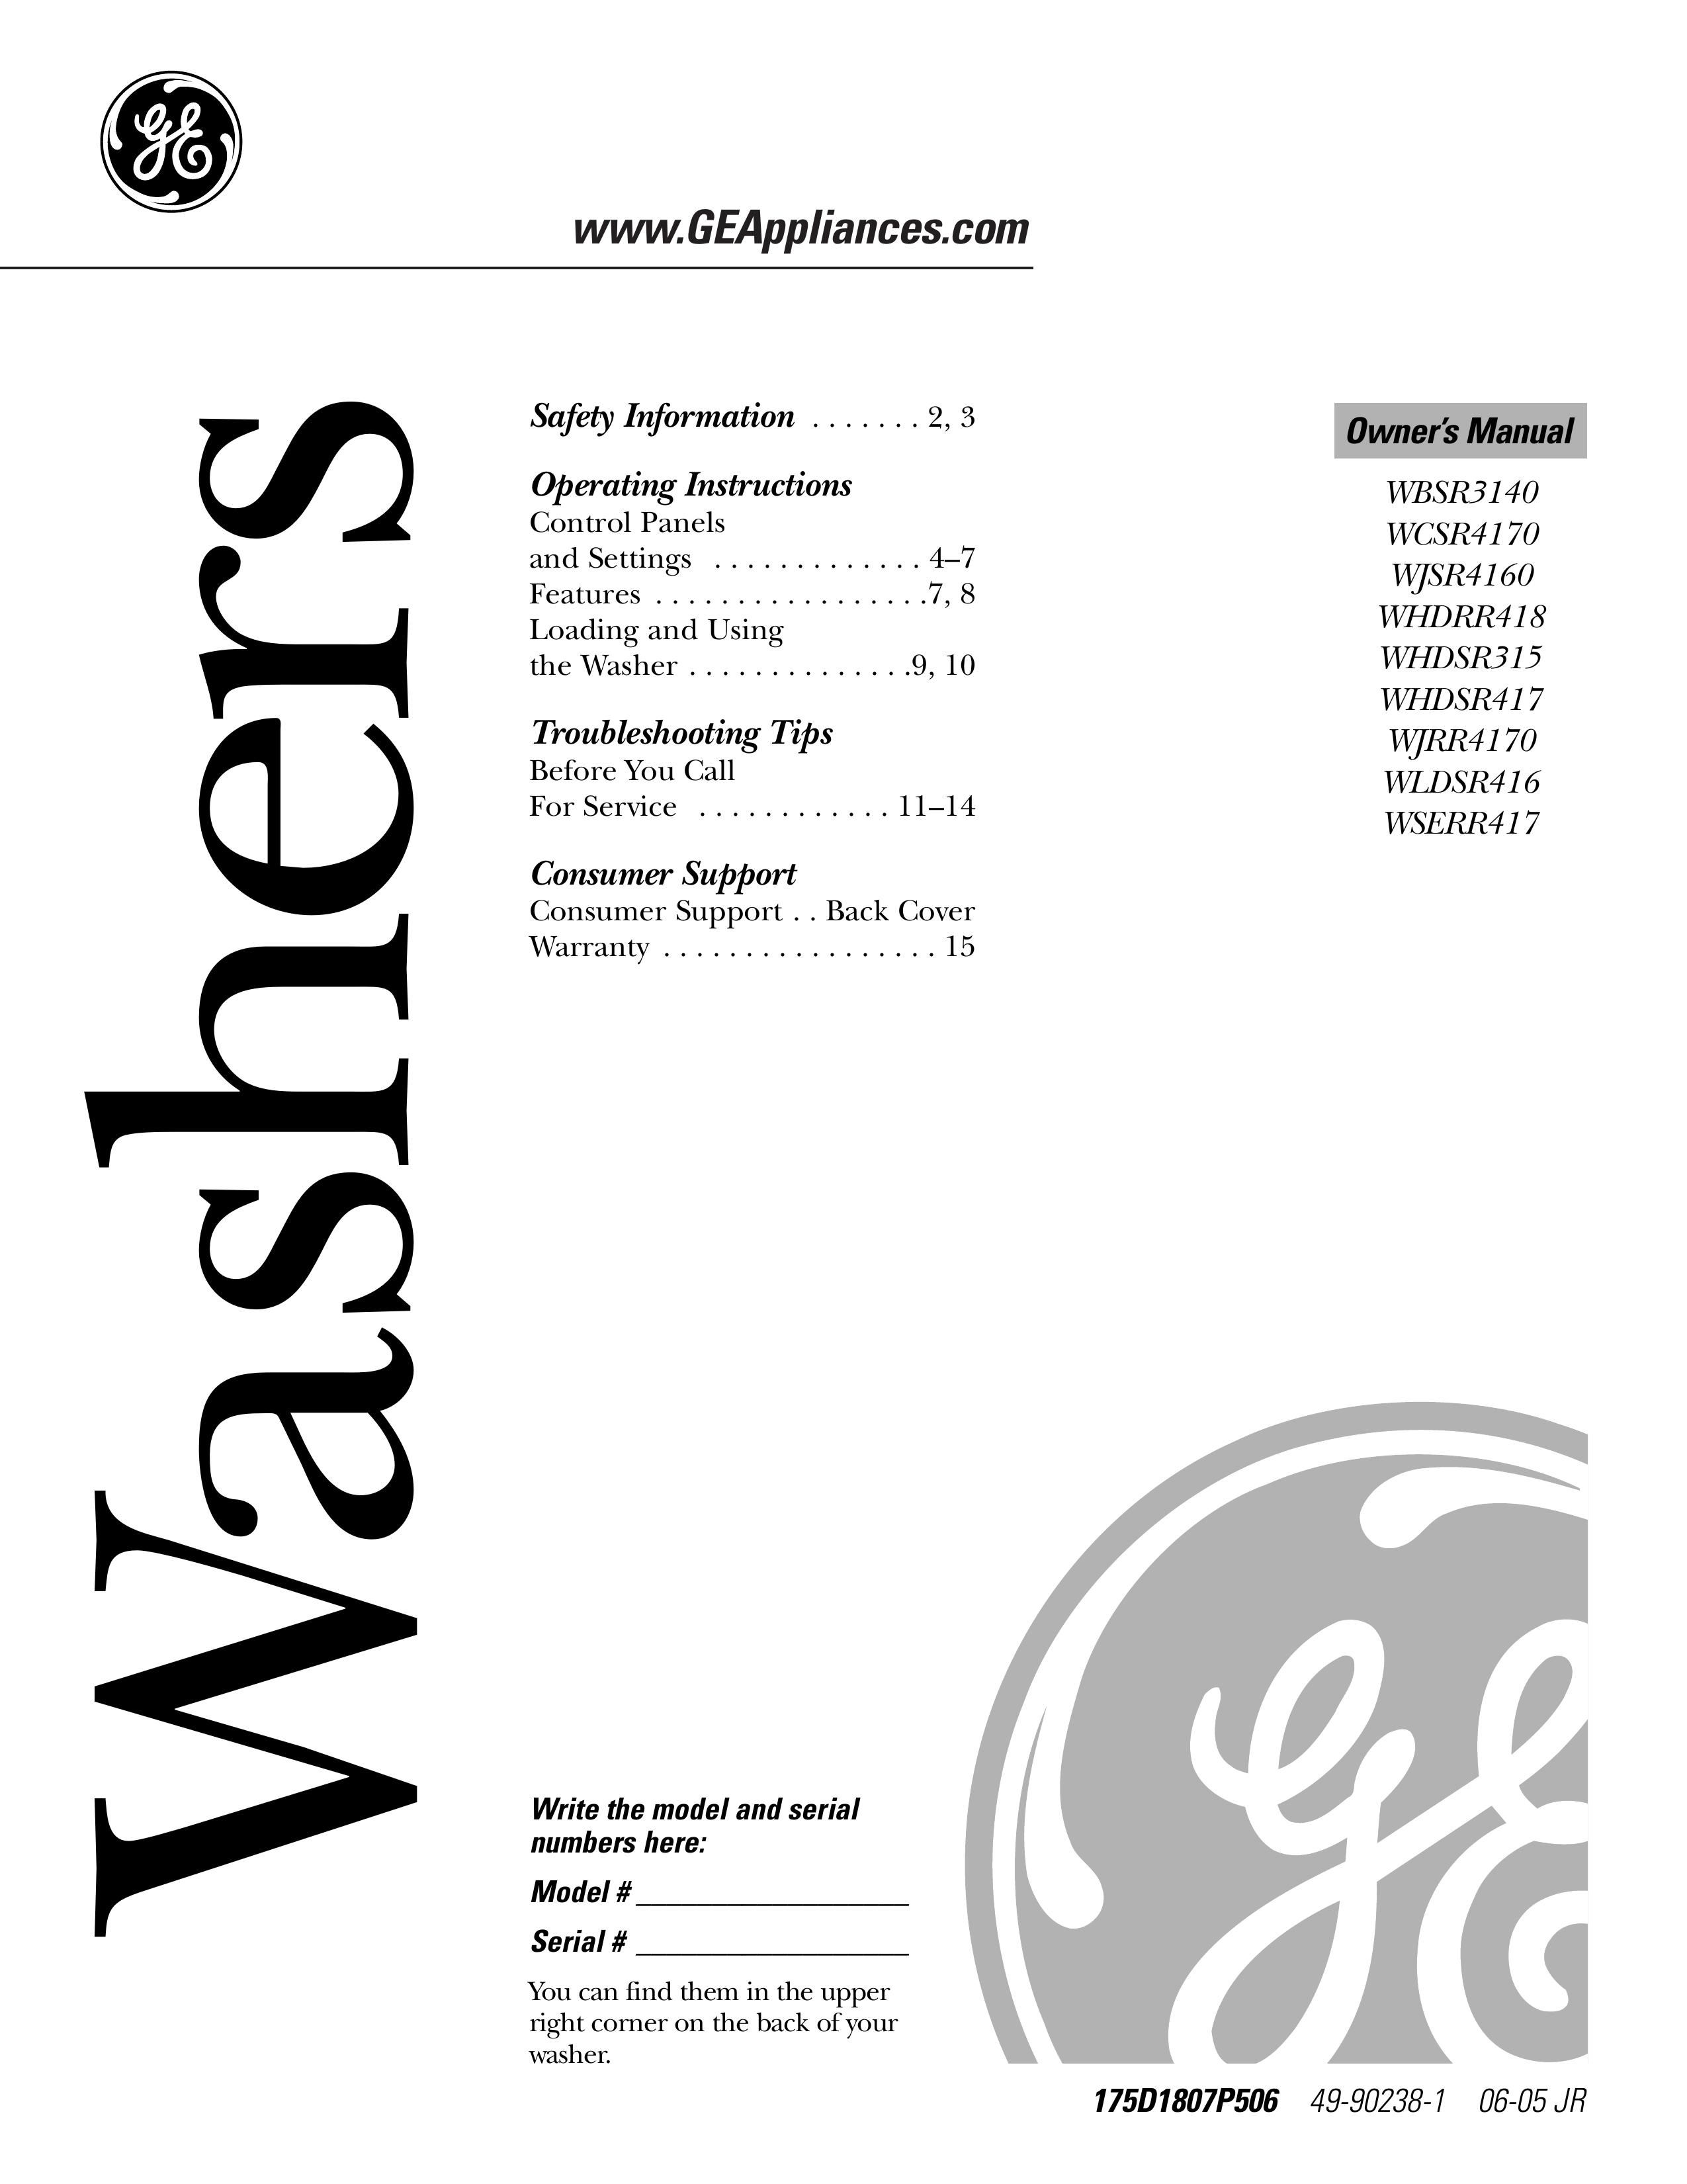 GE Monogram WJRR4170 Washer/Dryer User Manual